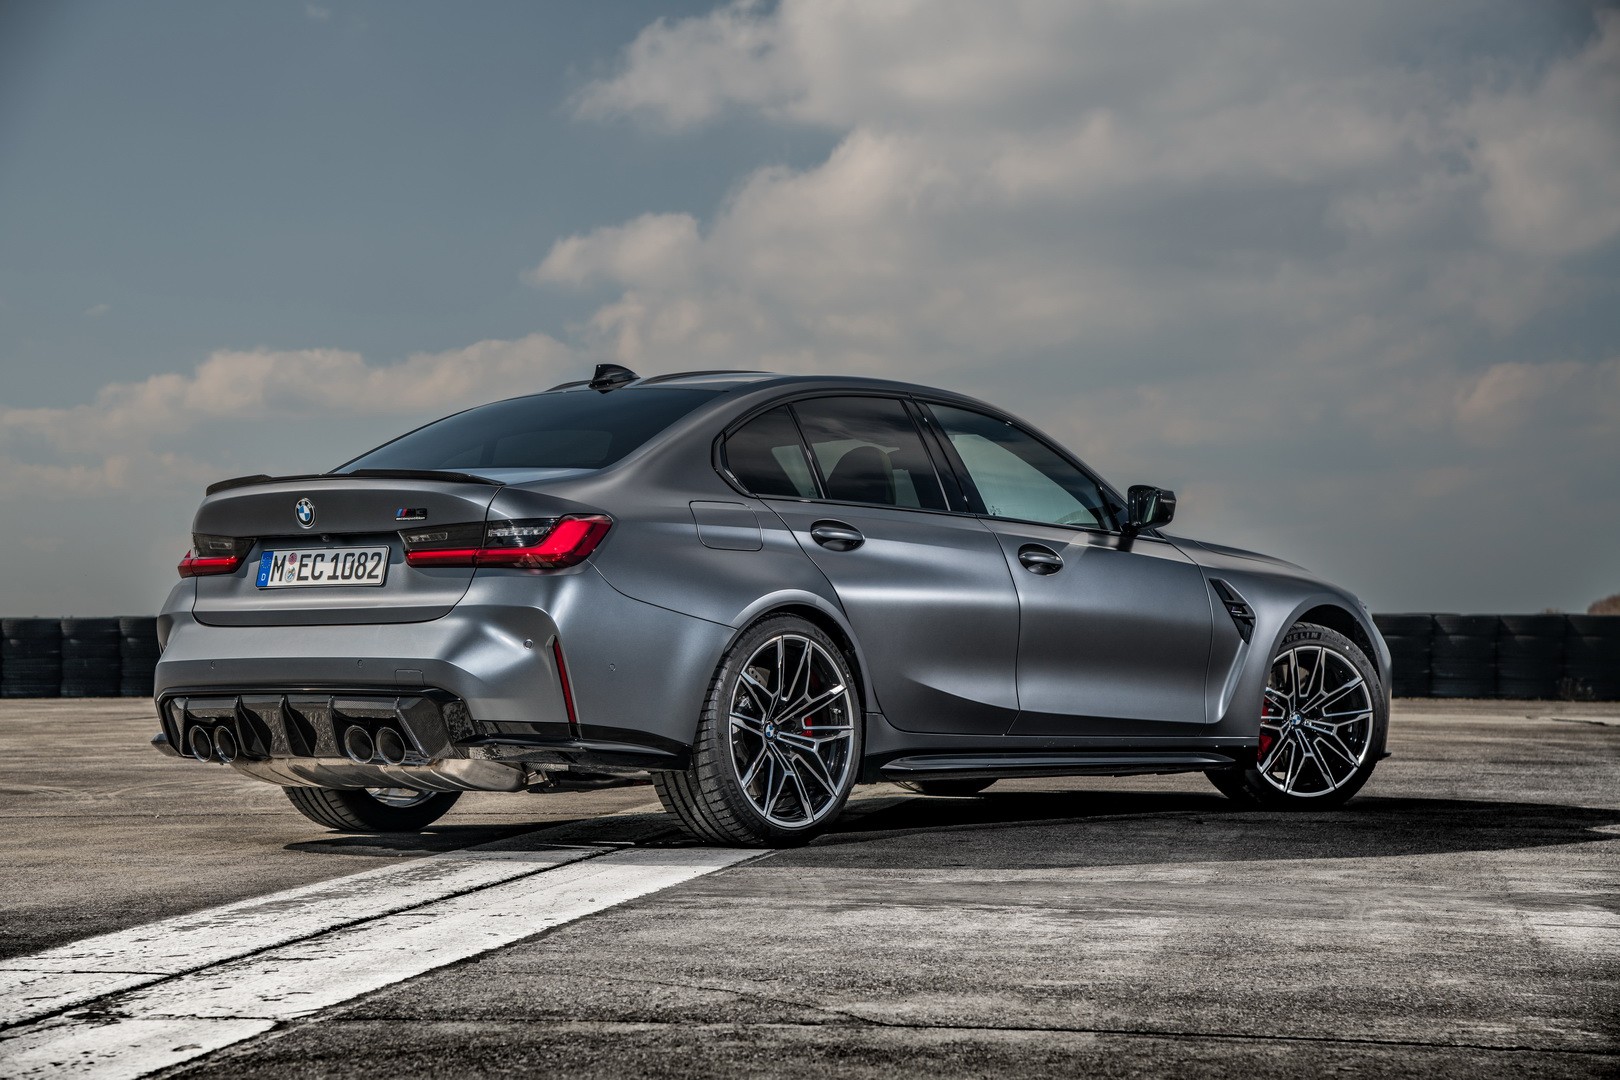 2023 BMW M3 LCI Interior Revealed, Boasts Curved Display and LatestGen